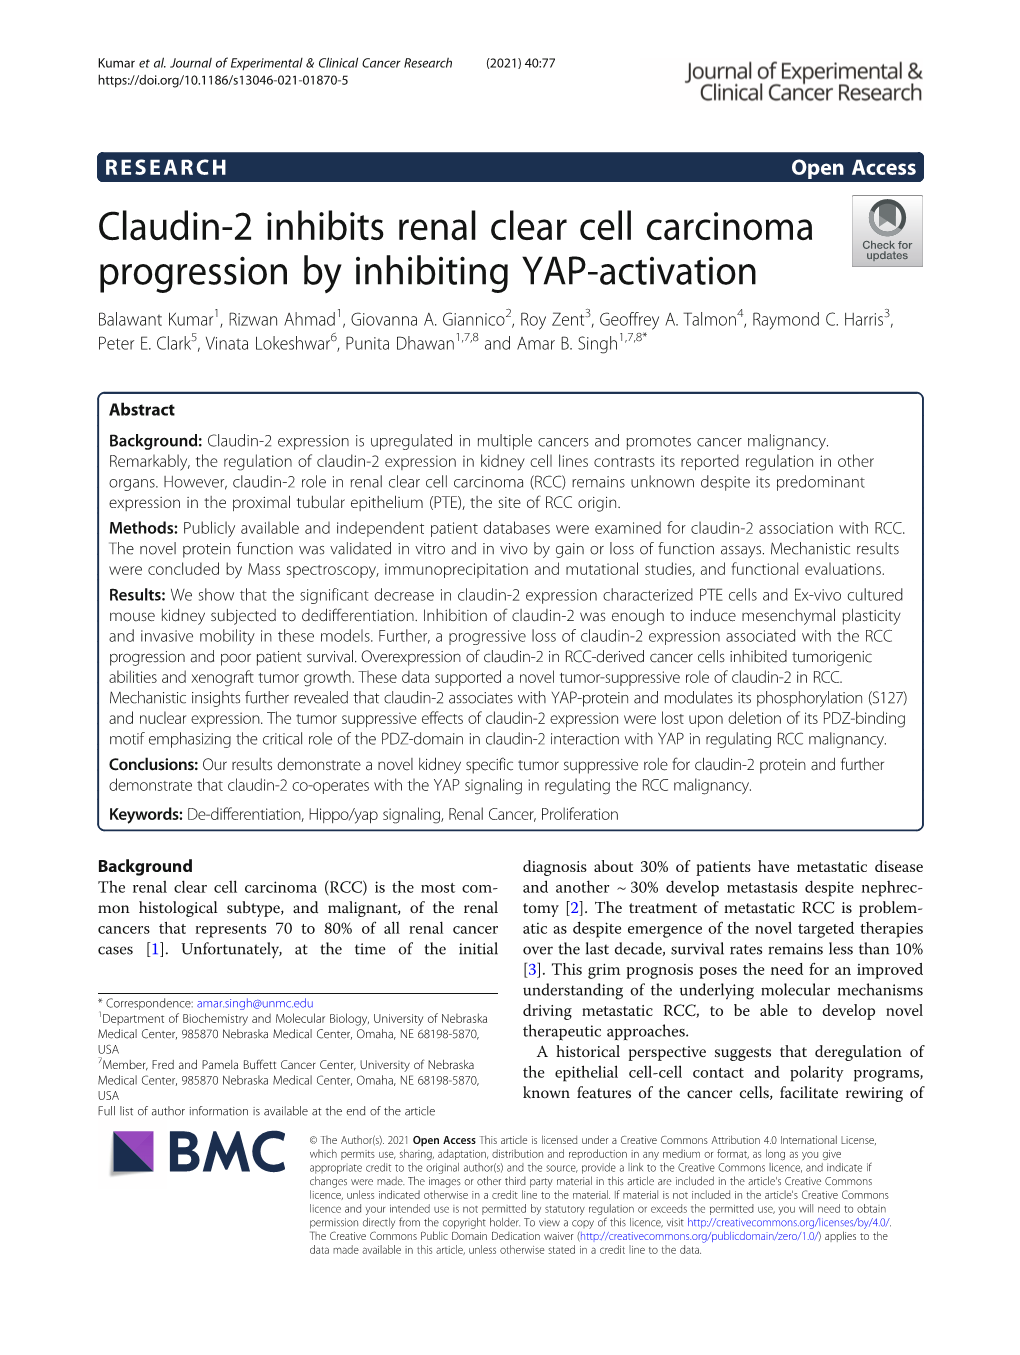 Claudin-2 Inhibits Renal Clear Cell Carcinoma Progression by Inhibiting YAP-Activation Balawant Kumar1, Rizwan Ahmad1, Giovanna A